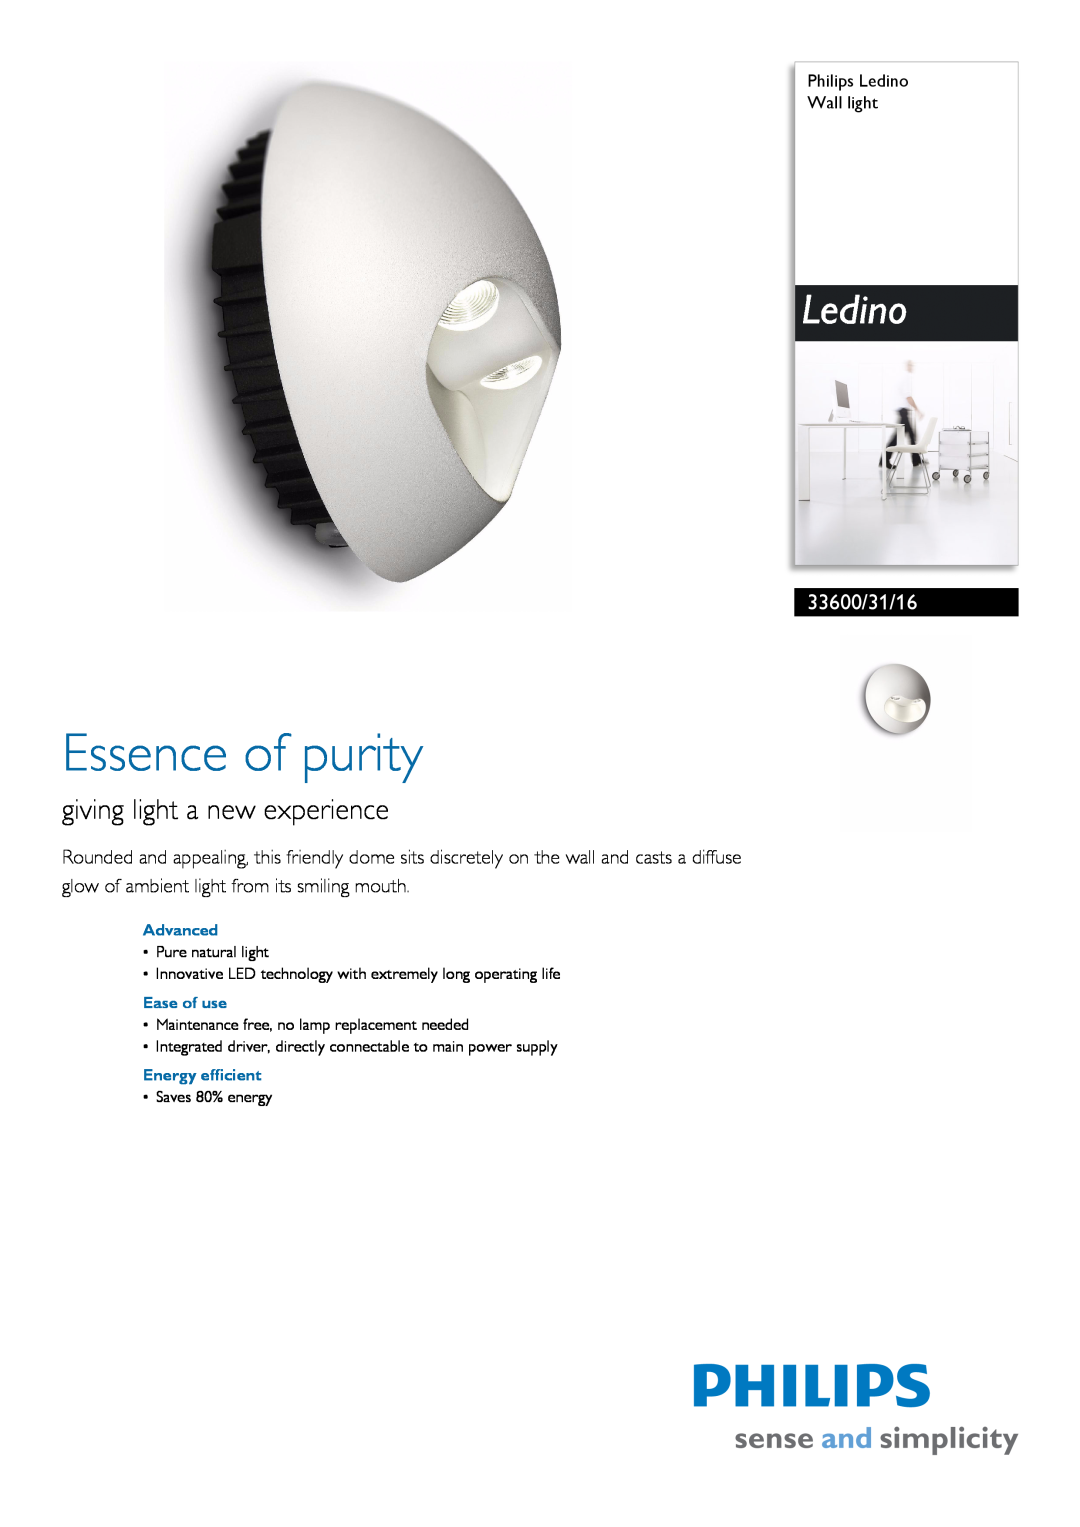 Philips 33600/31/16 manual Philips Ledino Wall light, Advanced, Ease of use, Energy efficient, Essence of purity 